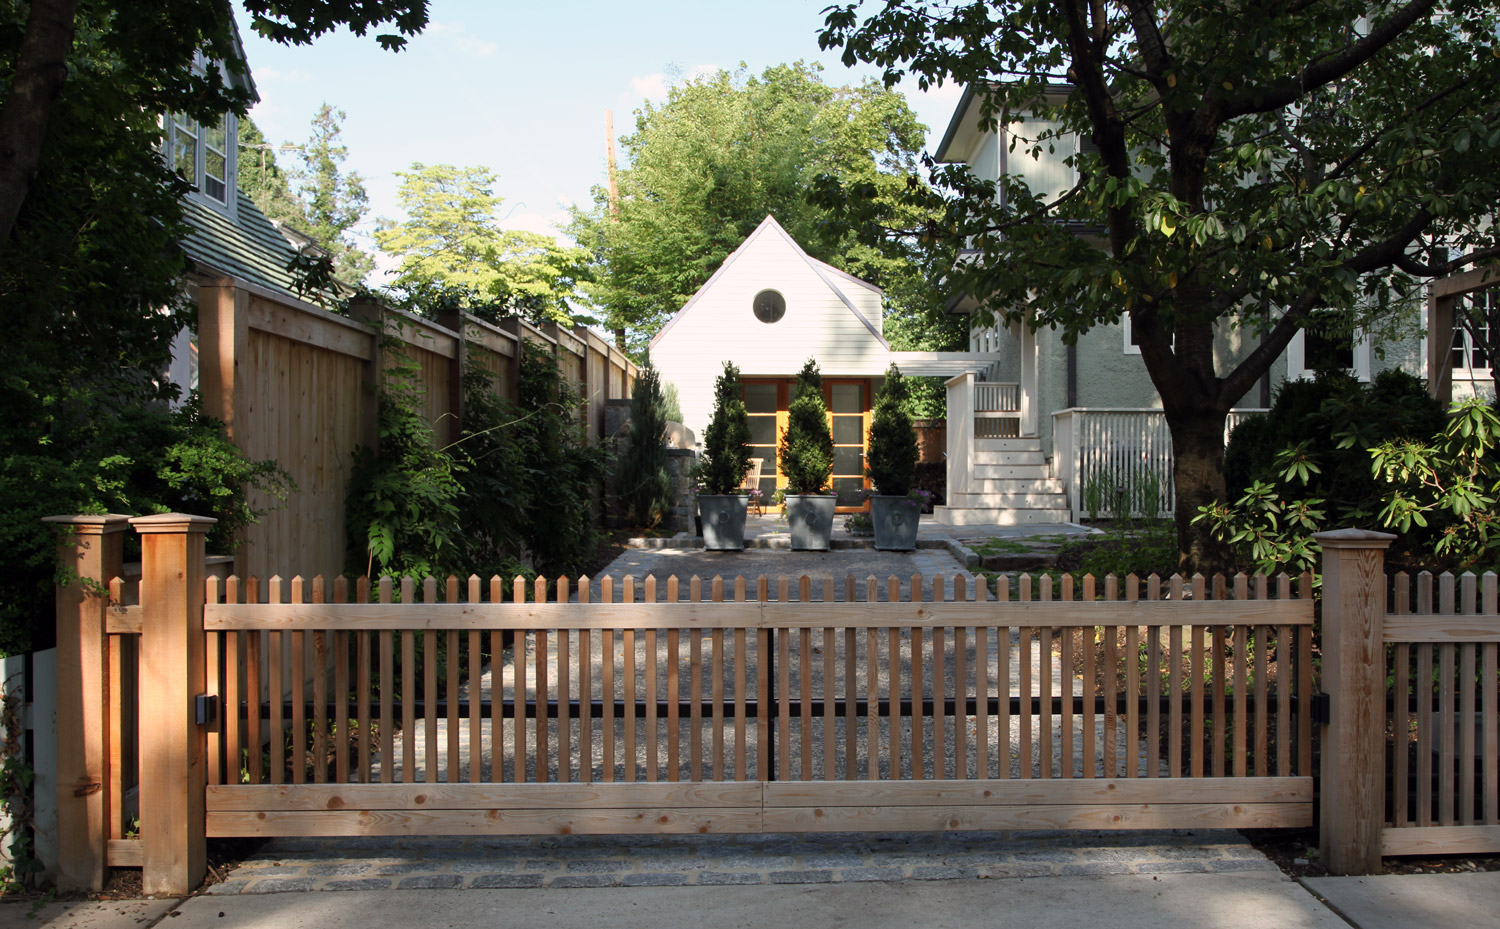   Project Location: &nbsp;Washington, DC (Chevy Chase)  Completion: &nbsp;Fall 2013  General Contractor: &nbsp;Redux Garden &amp; Home  Project Architect: &nbsp;E/L Studio (garage design)  Primary Material Palette: &nbsp;granite cobblestones, bluesto